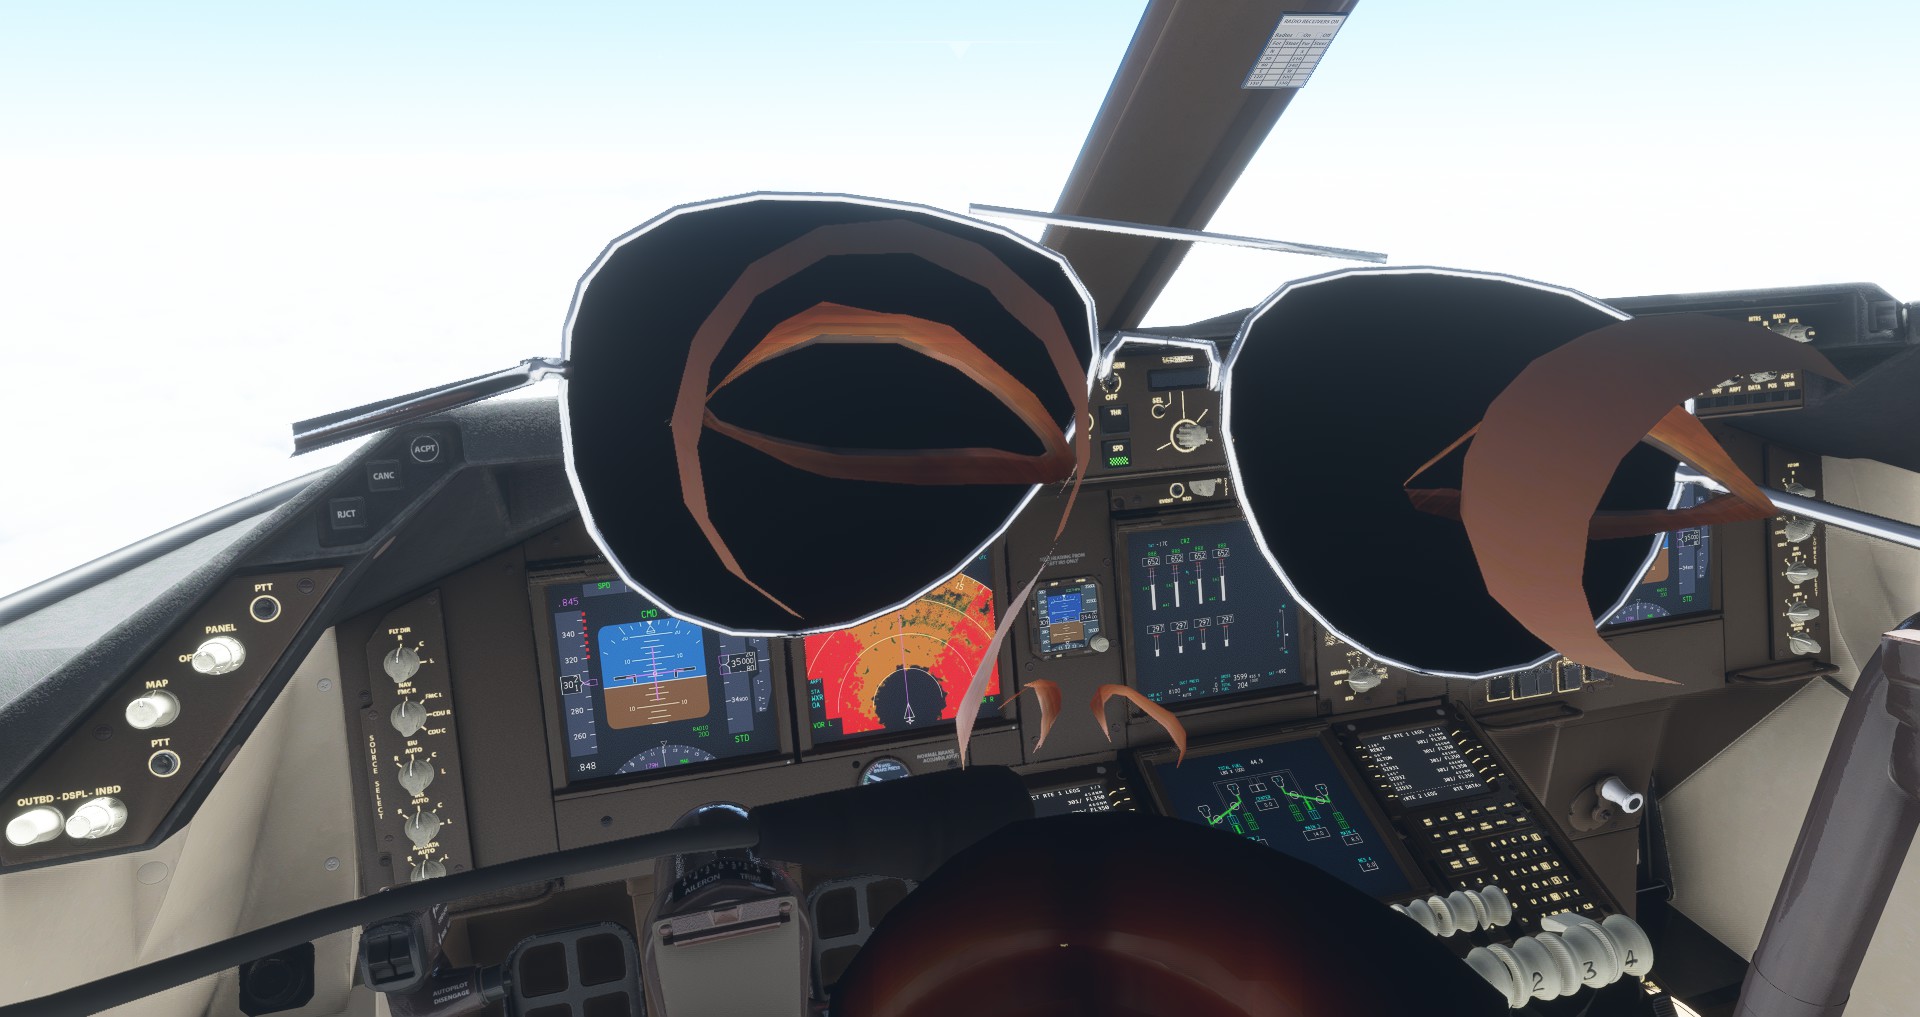 microsoft flight simulator 2015 and gaming goggles